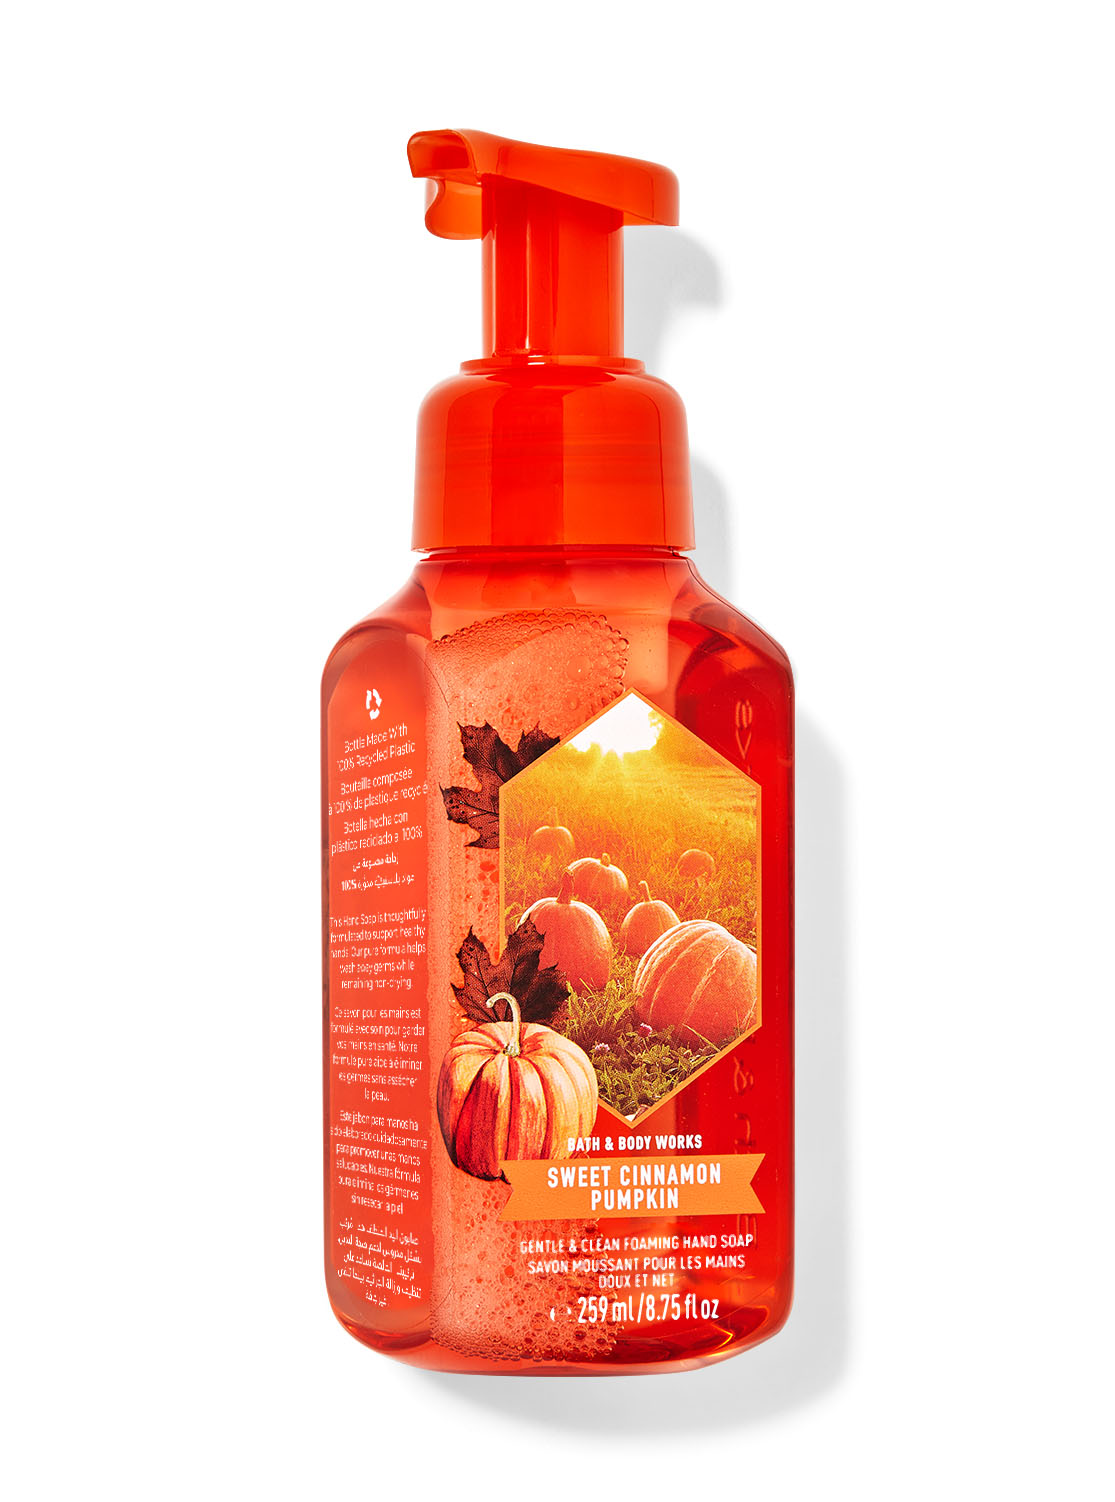 Sweet Cinnamon Pumpkin Gentle & Clean Foaming Hand Soap | Bath and Body Works